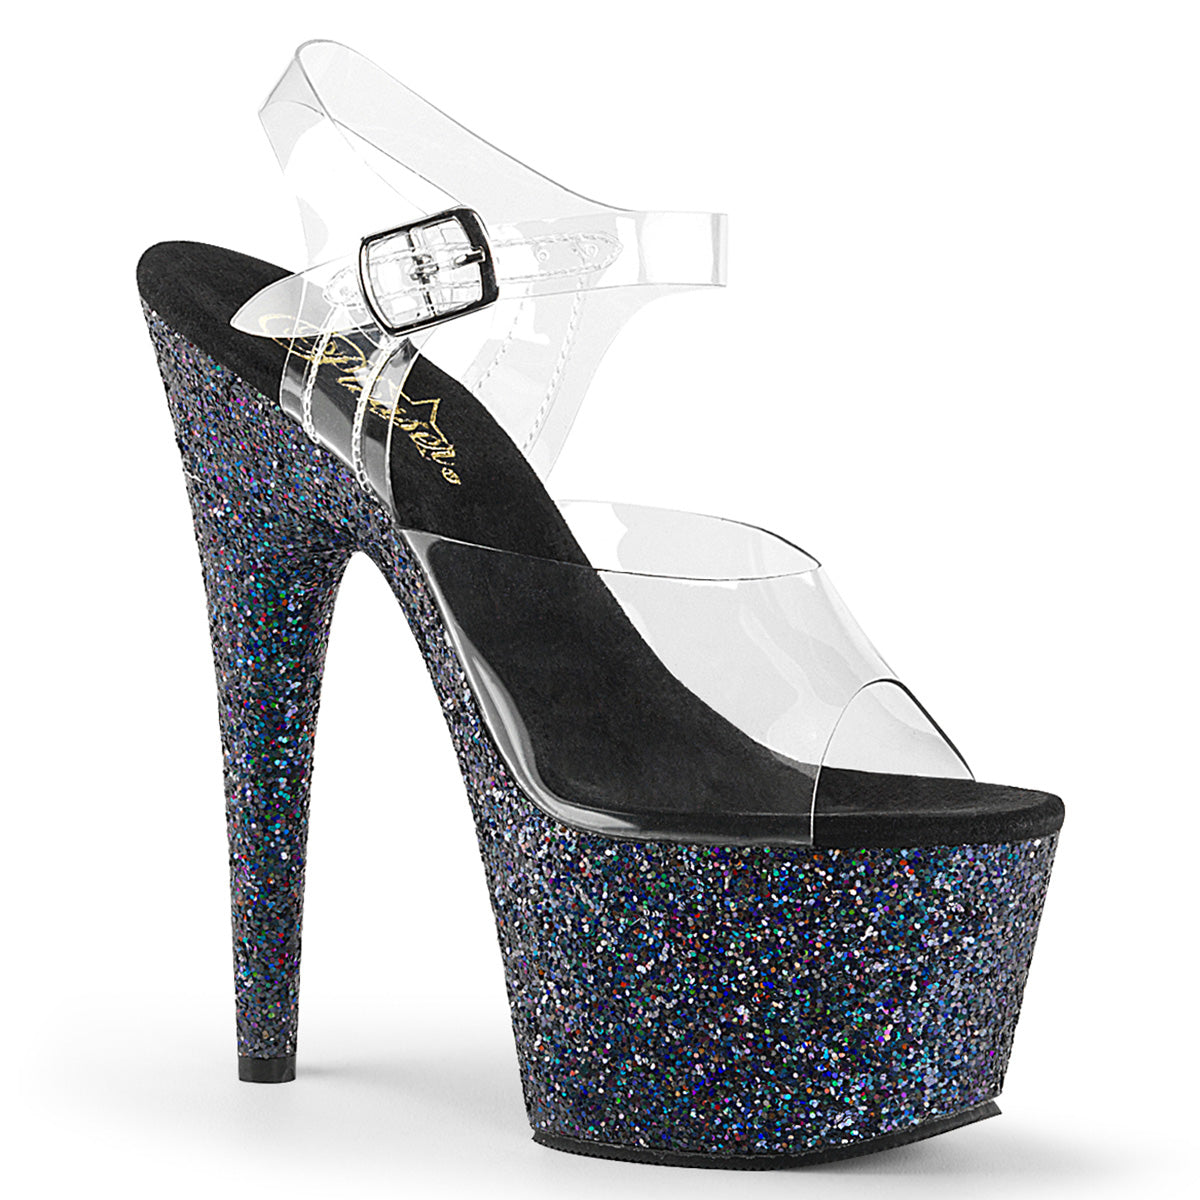 Pleaser Womens Sandals ADORE-708LG Clr/Blk Multi Glitter